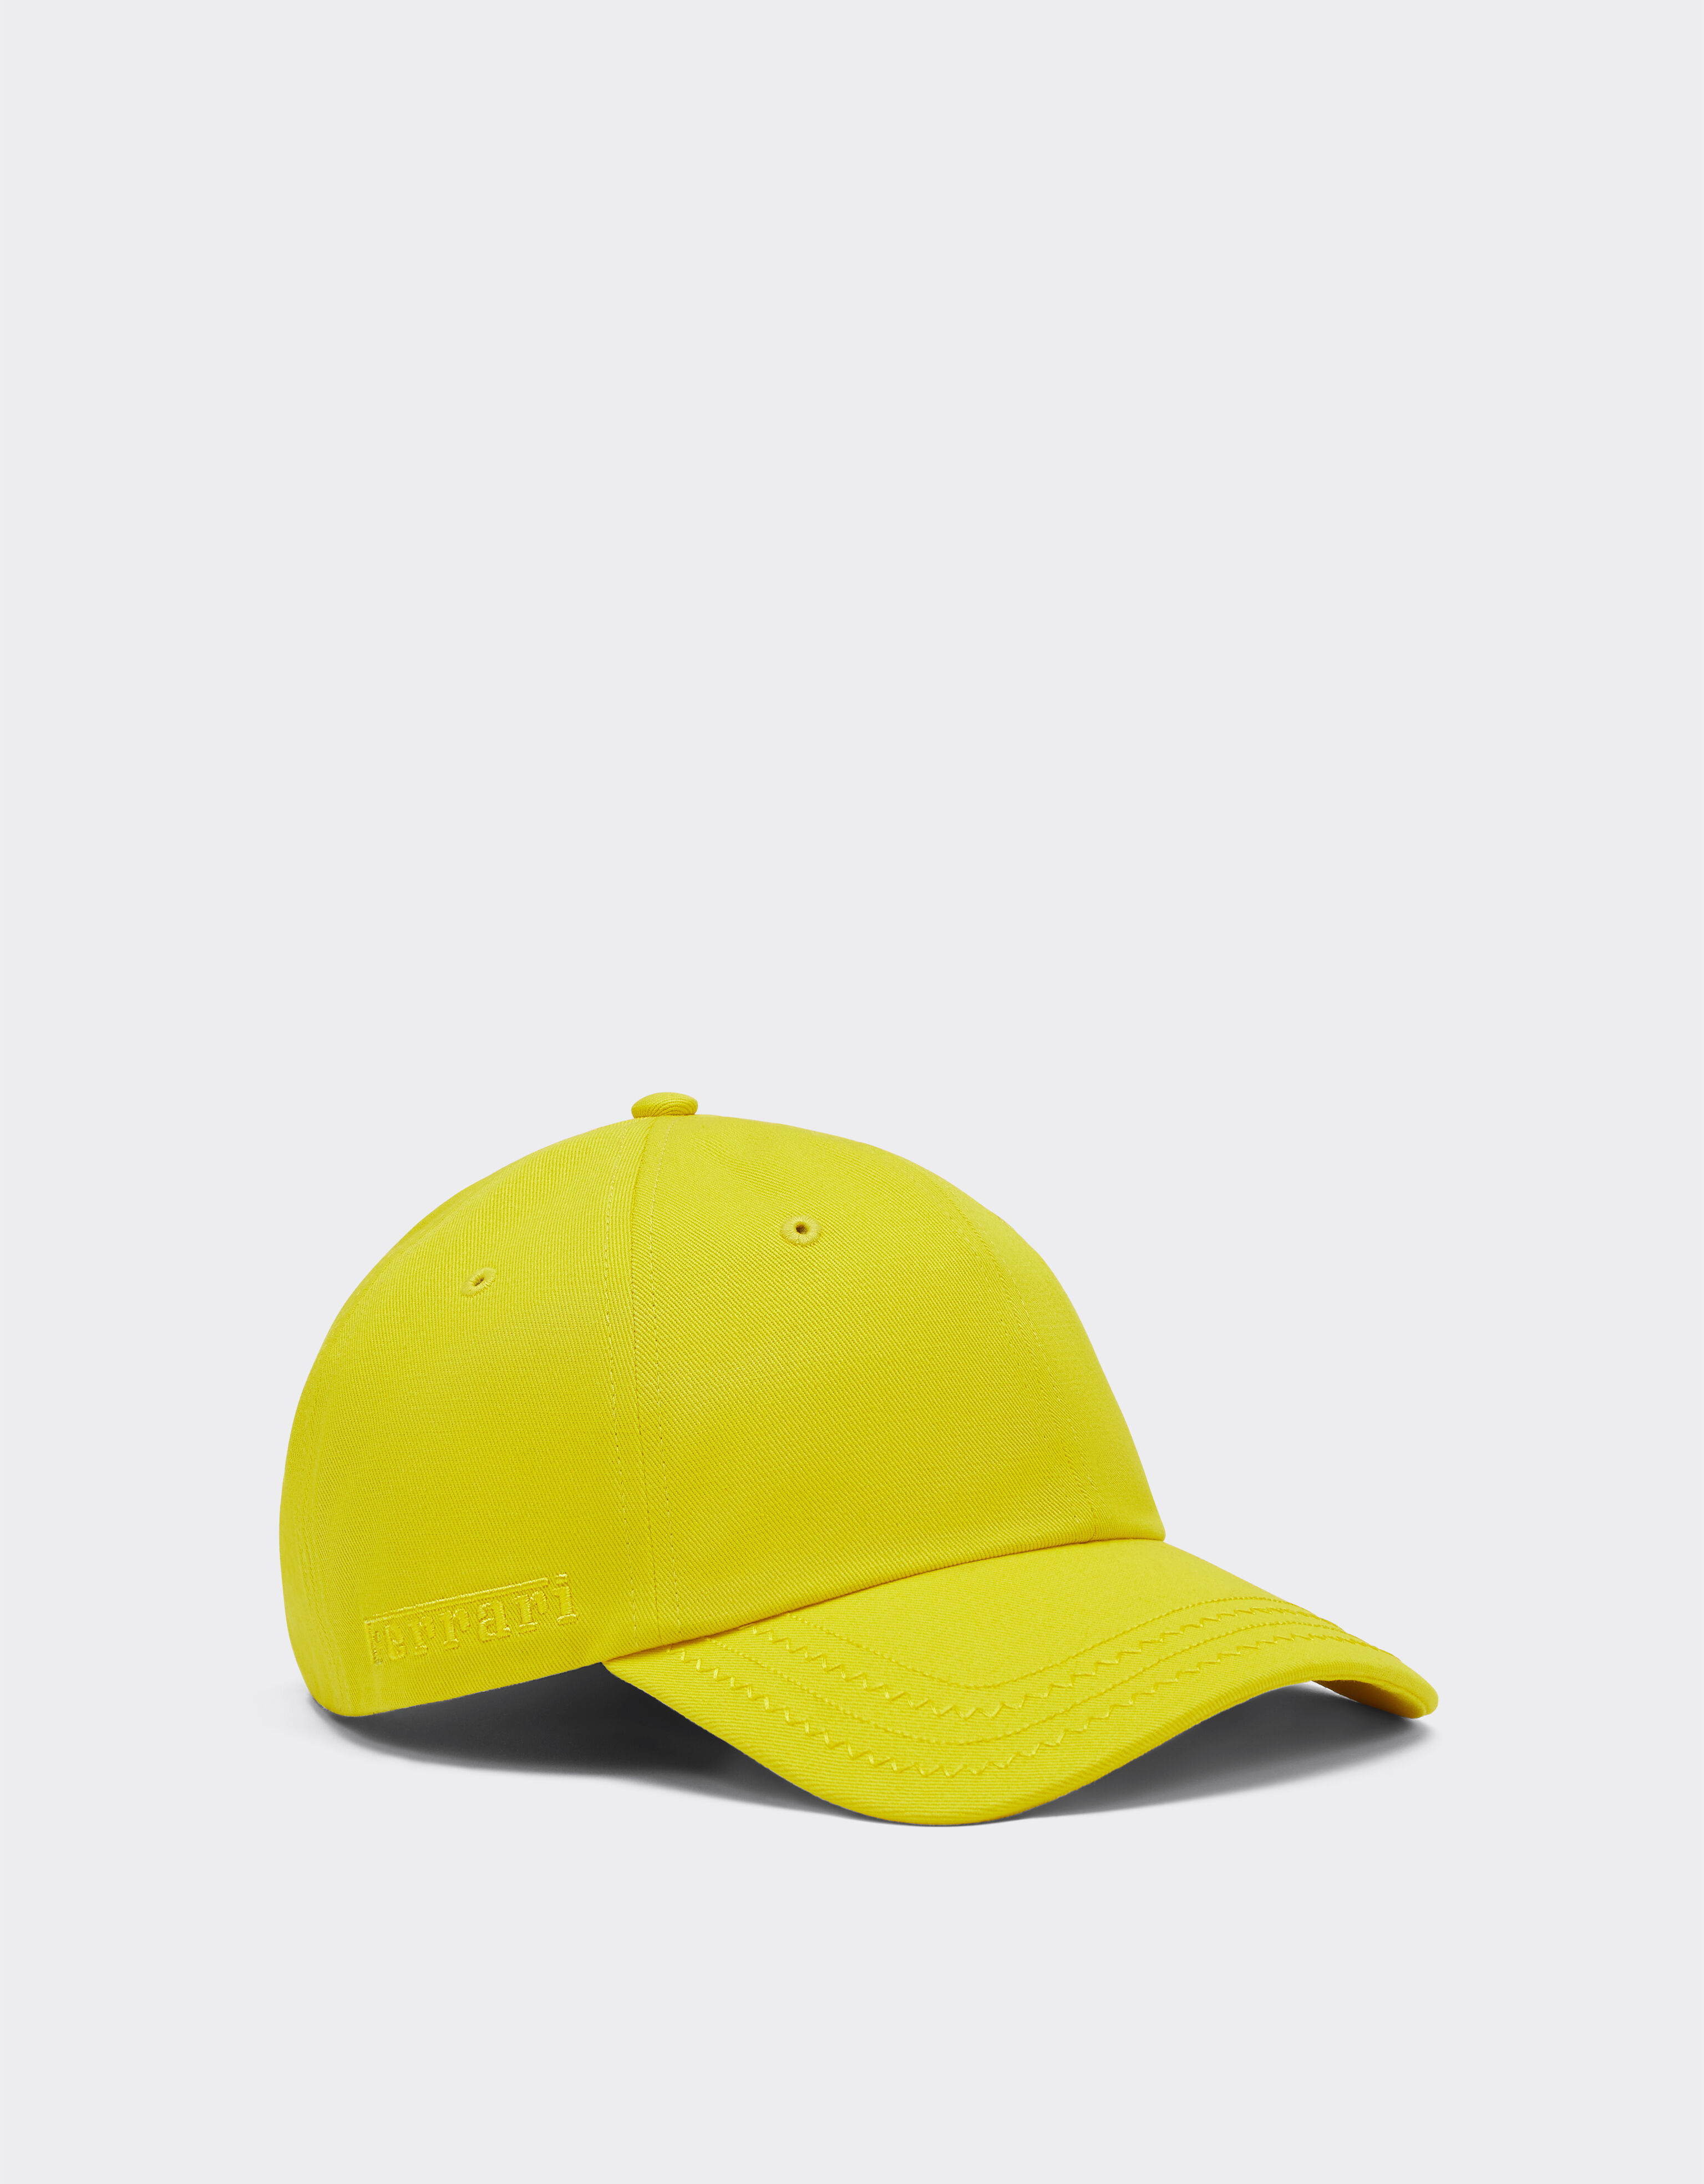 Ferrari Cotton baseball hat with Italian-flag motif Giallo Modena 20551f